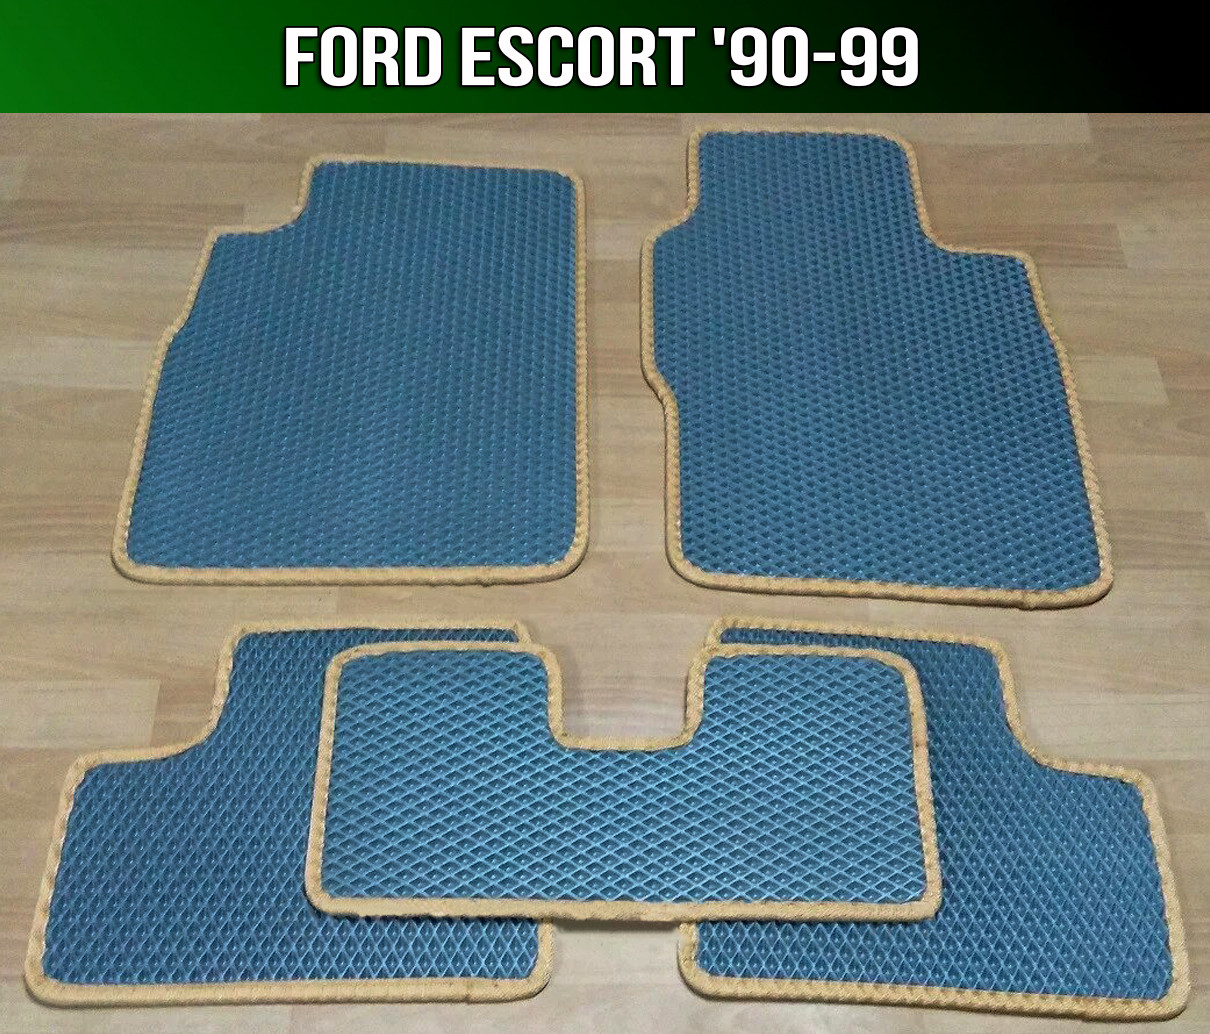 Ford Escort 90